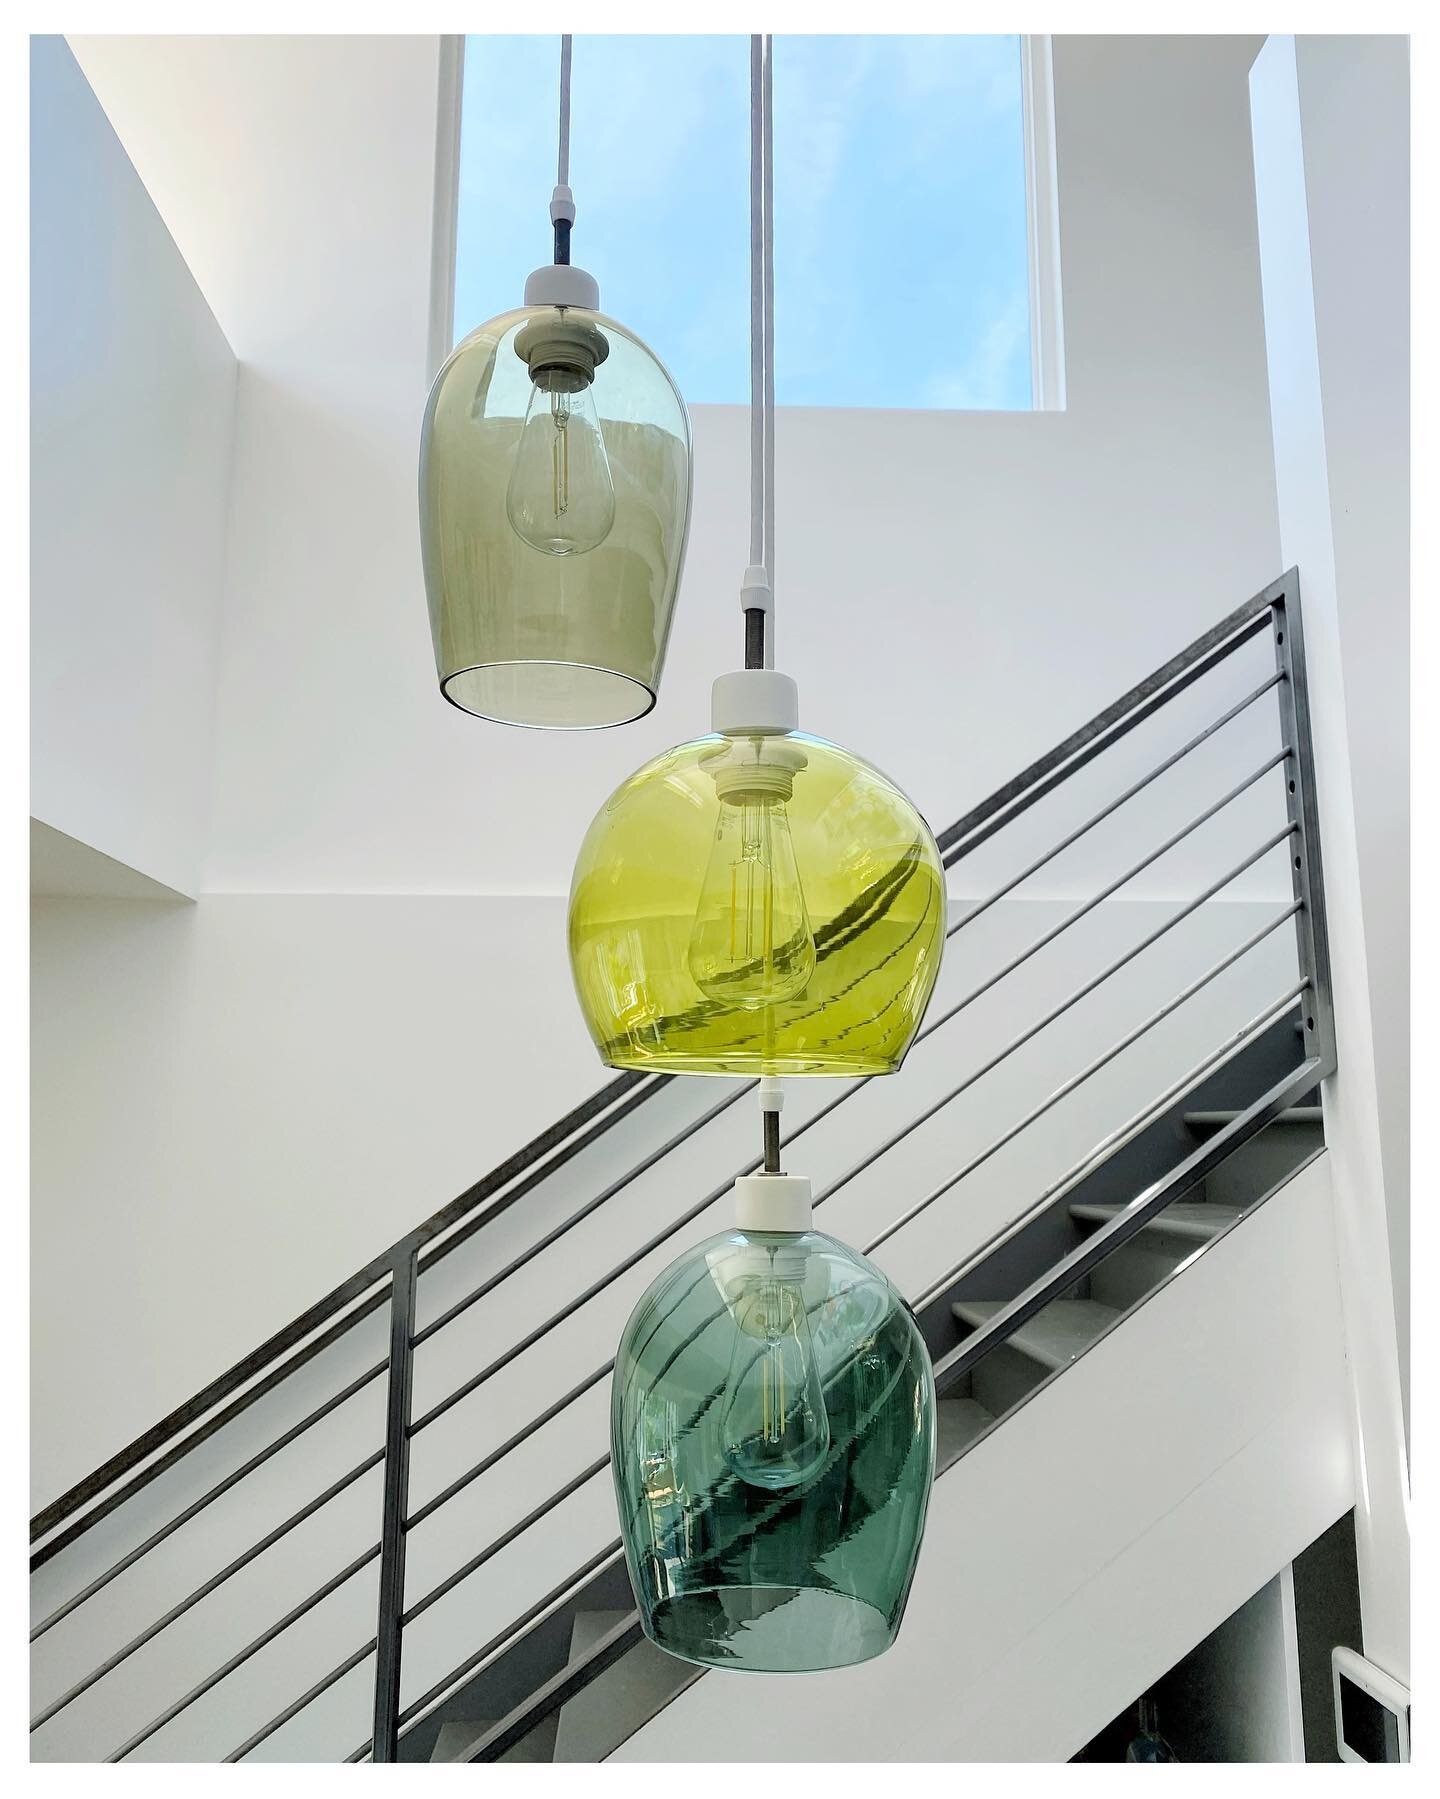 ✨Custom lighting trio in the center of this modern mountain home. 

#handblownglass #customlighting
 #💡